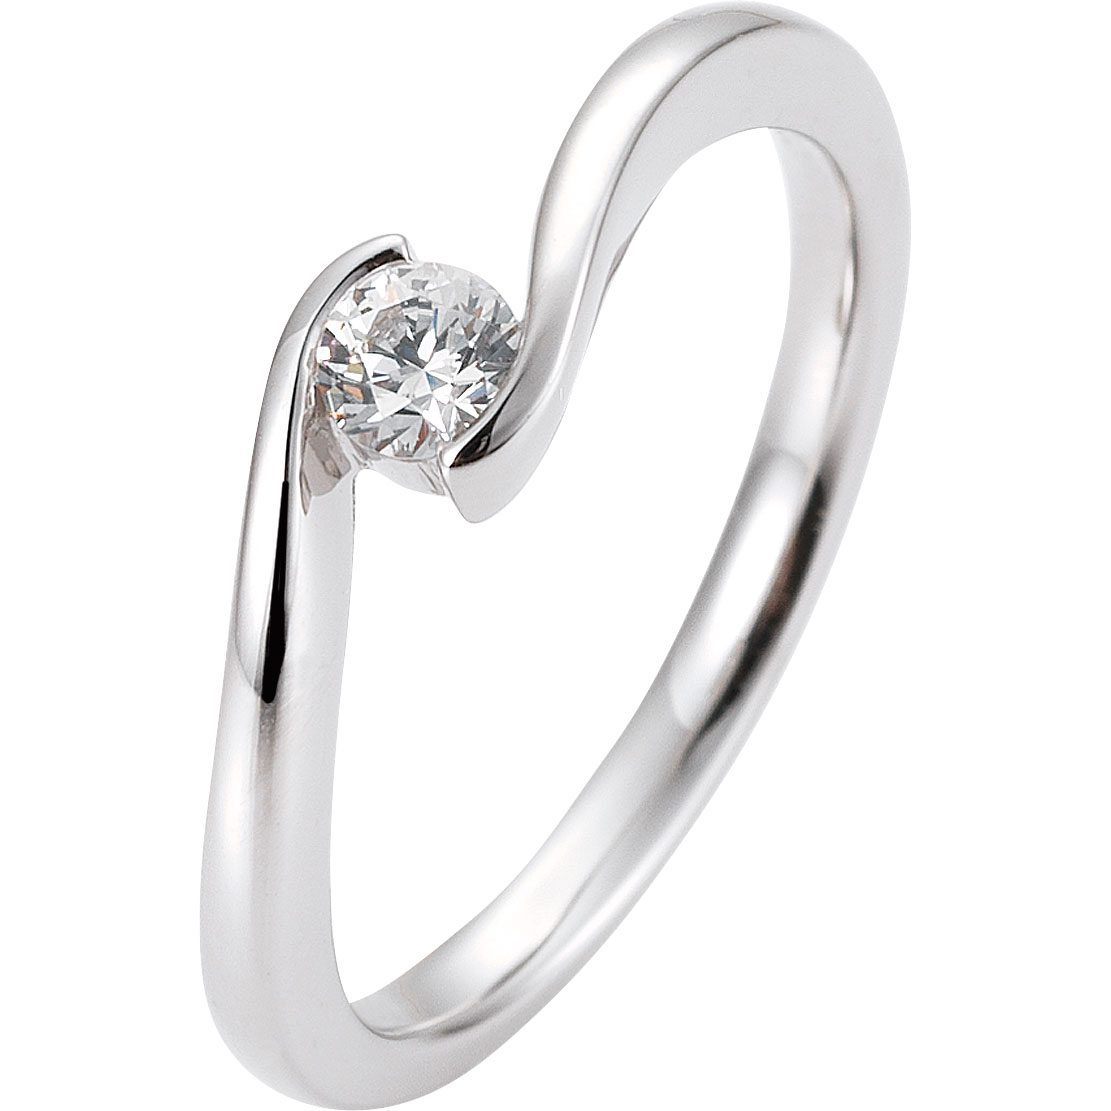 Custom design CZ rings engravable 925 silver jewelry wholesale